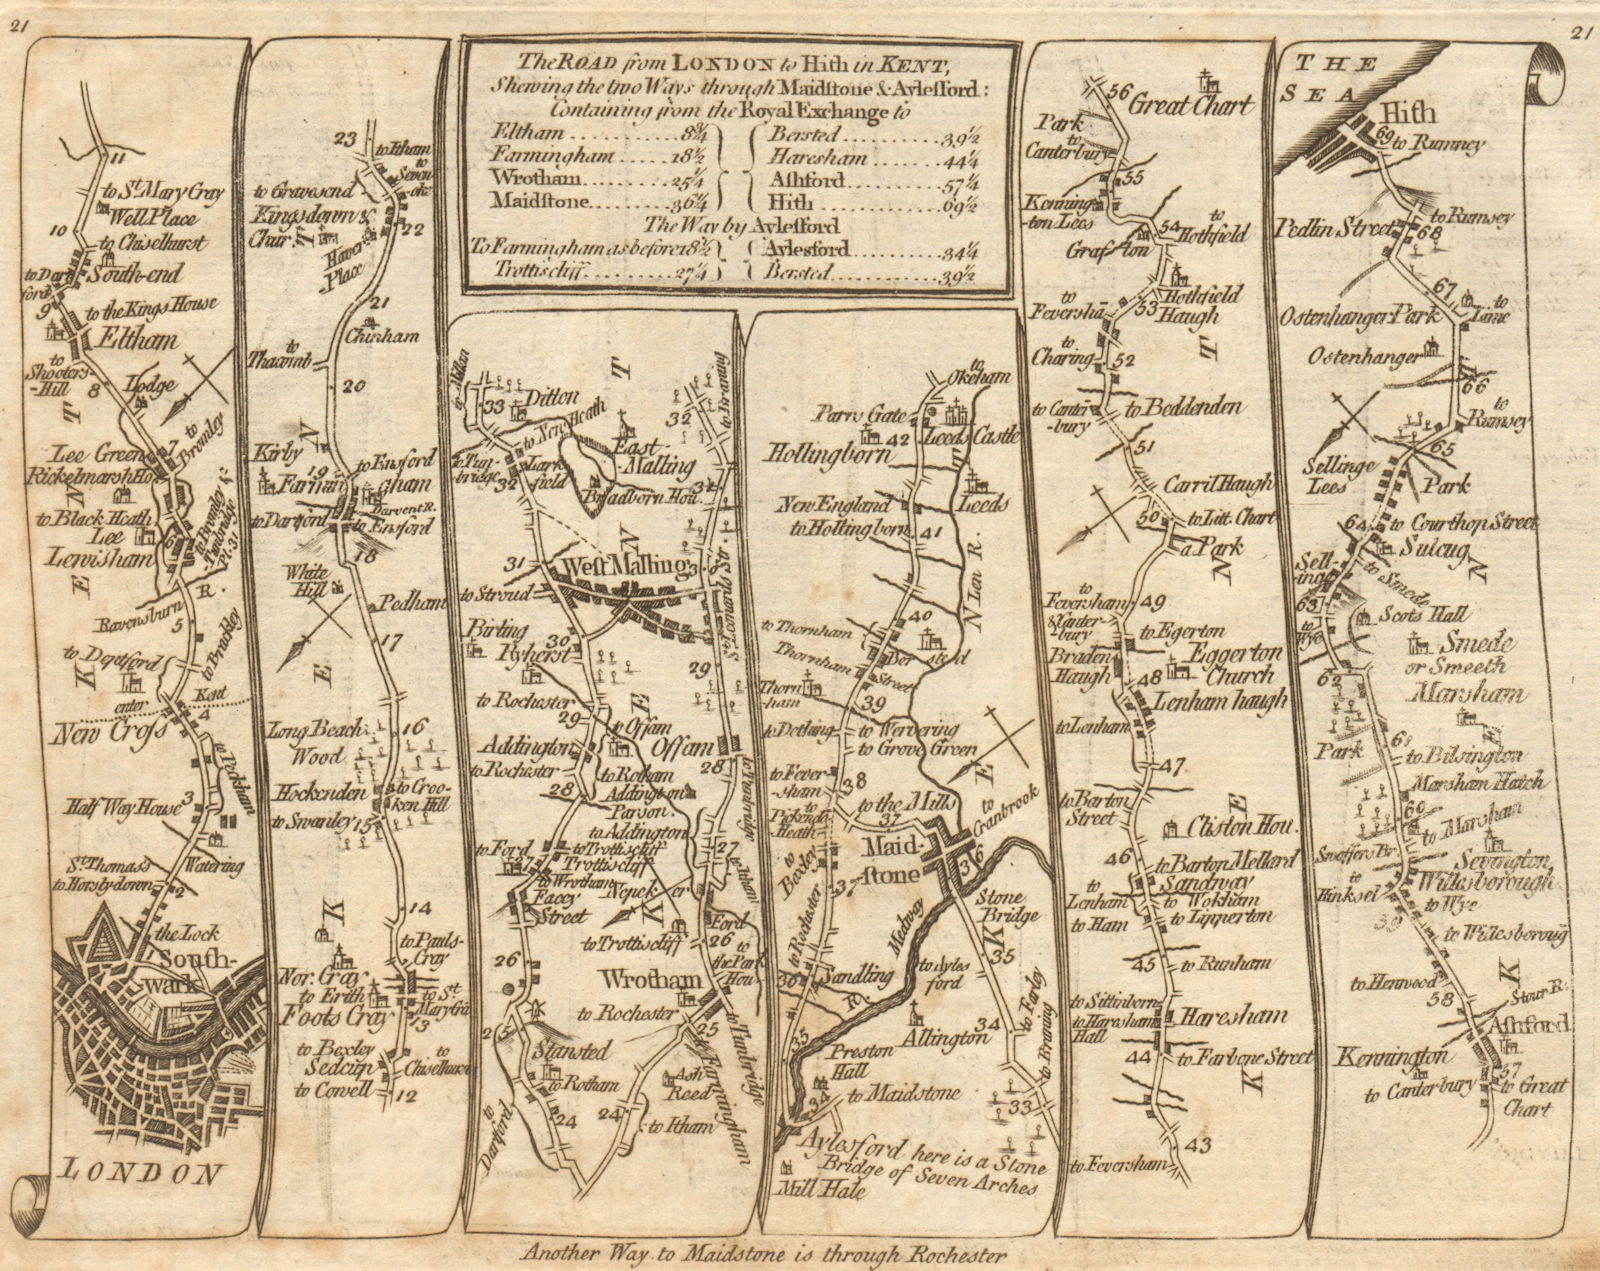 Associate Product London Lewisham West Malling Maidstone Ashford Hythe. KITCHIN road map 1767